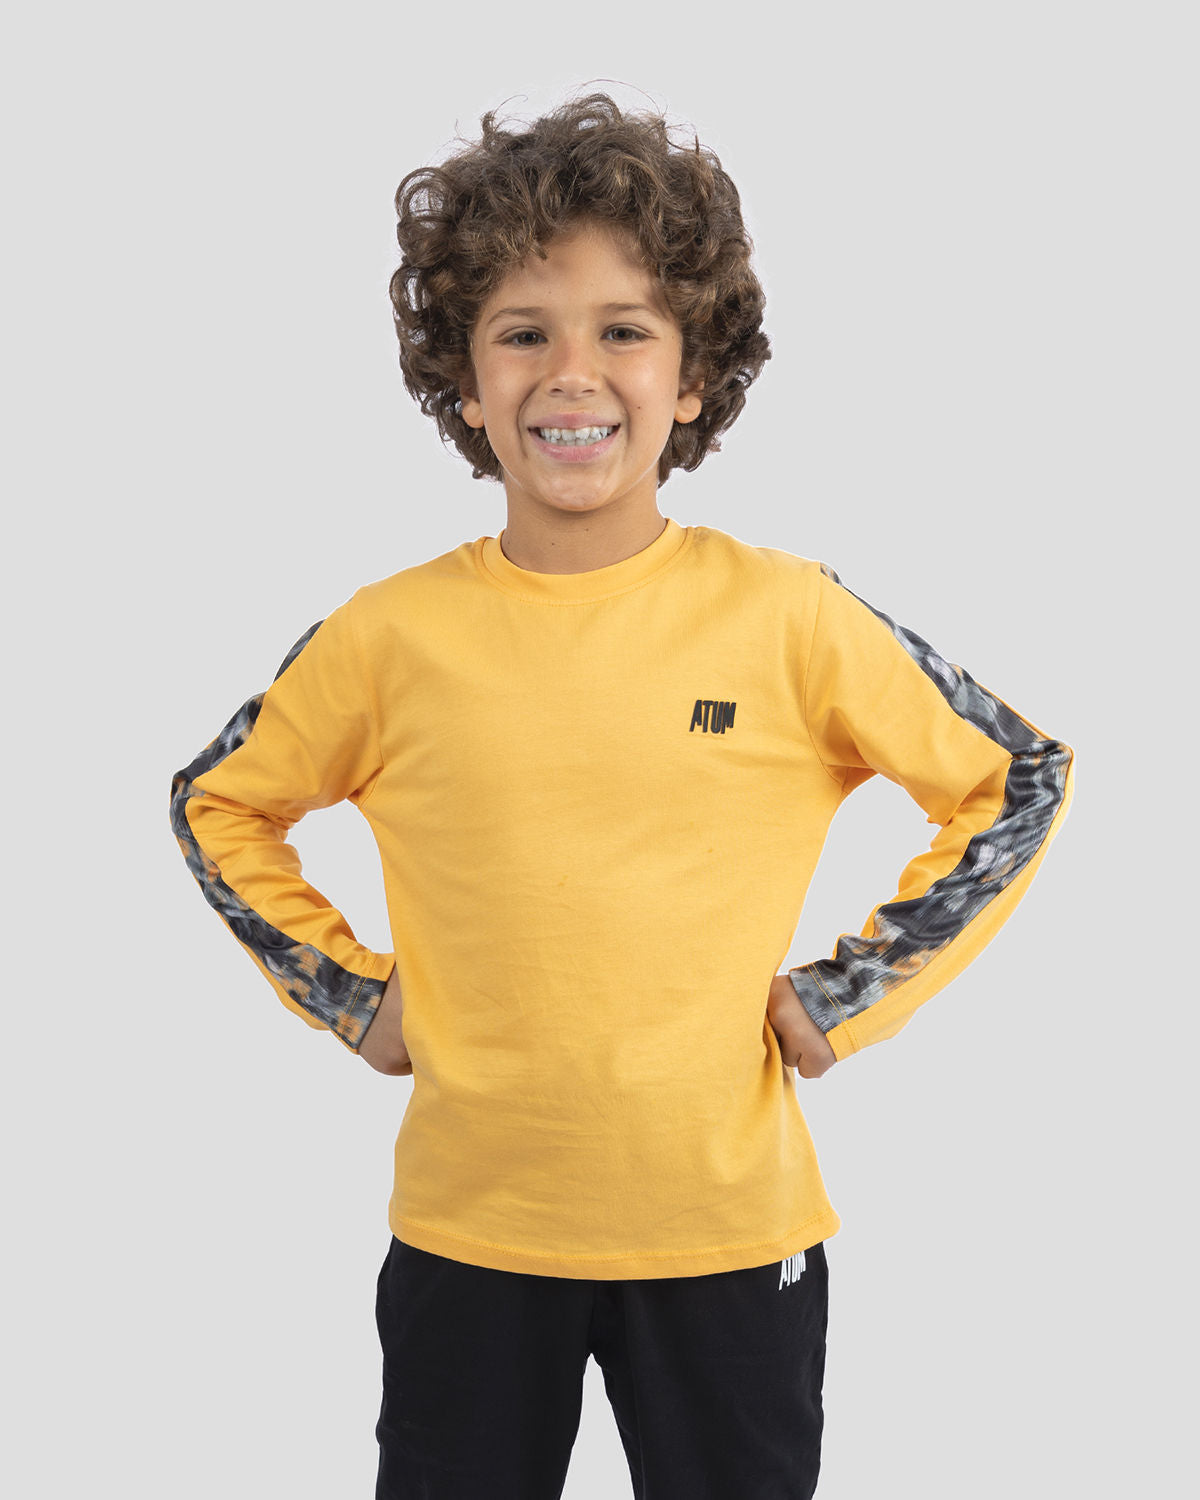 Atum boy's longsleeves t-shirt - Atum Egypt